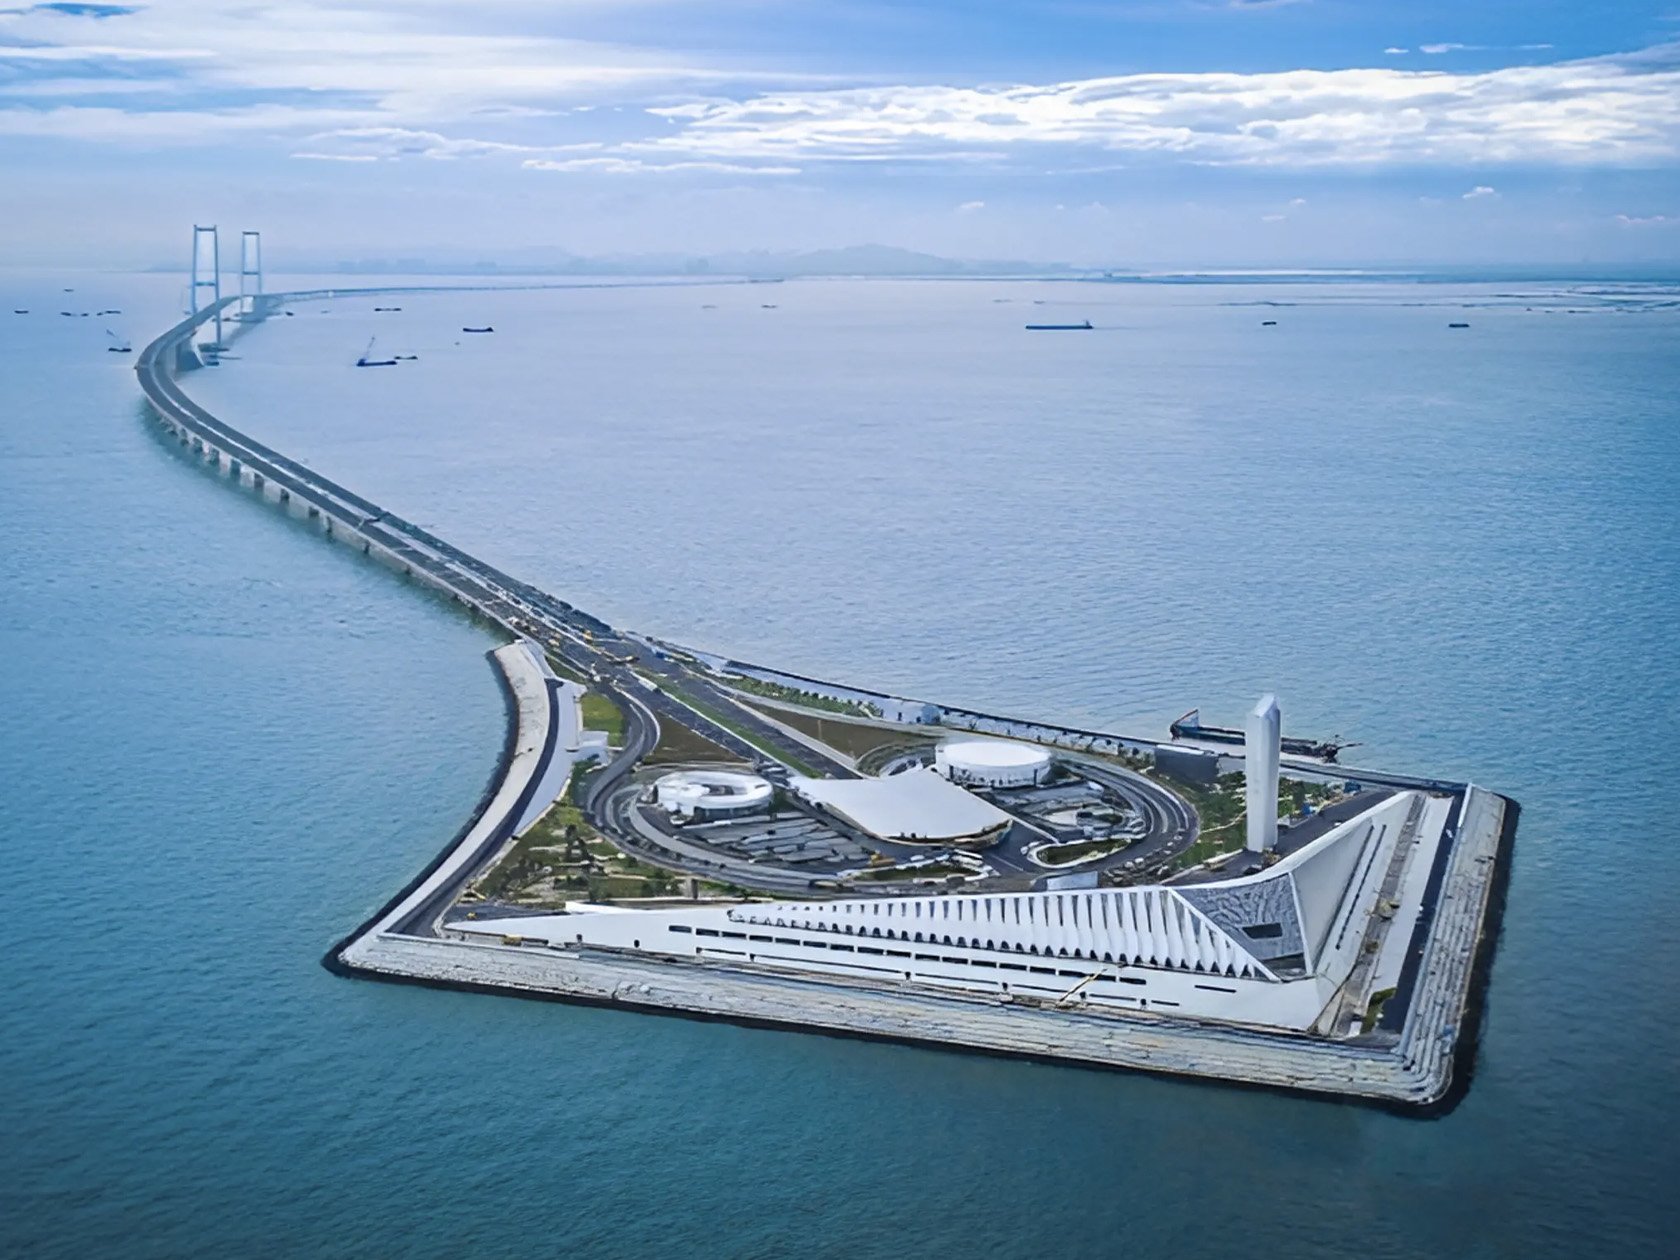 Revolutionary Cross-Sea Tunnel & Bridge System In China Has Broken 10 World Records